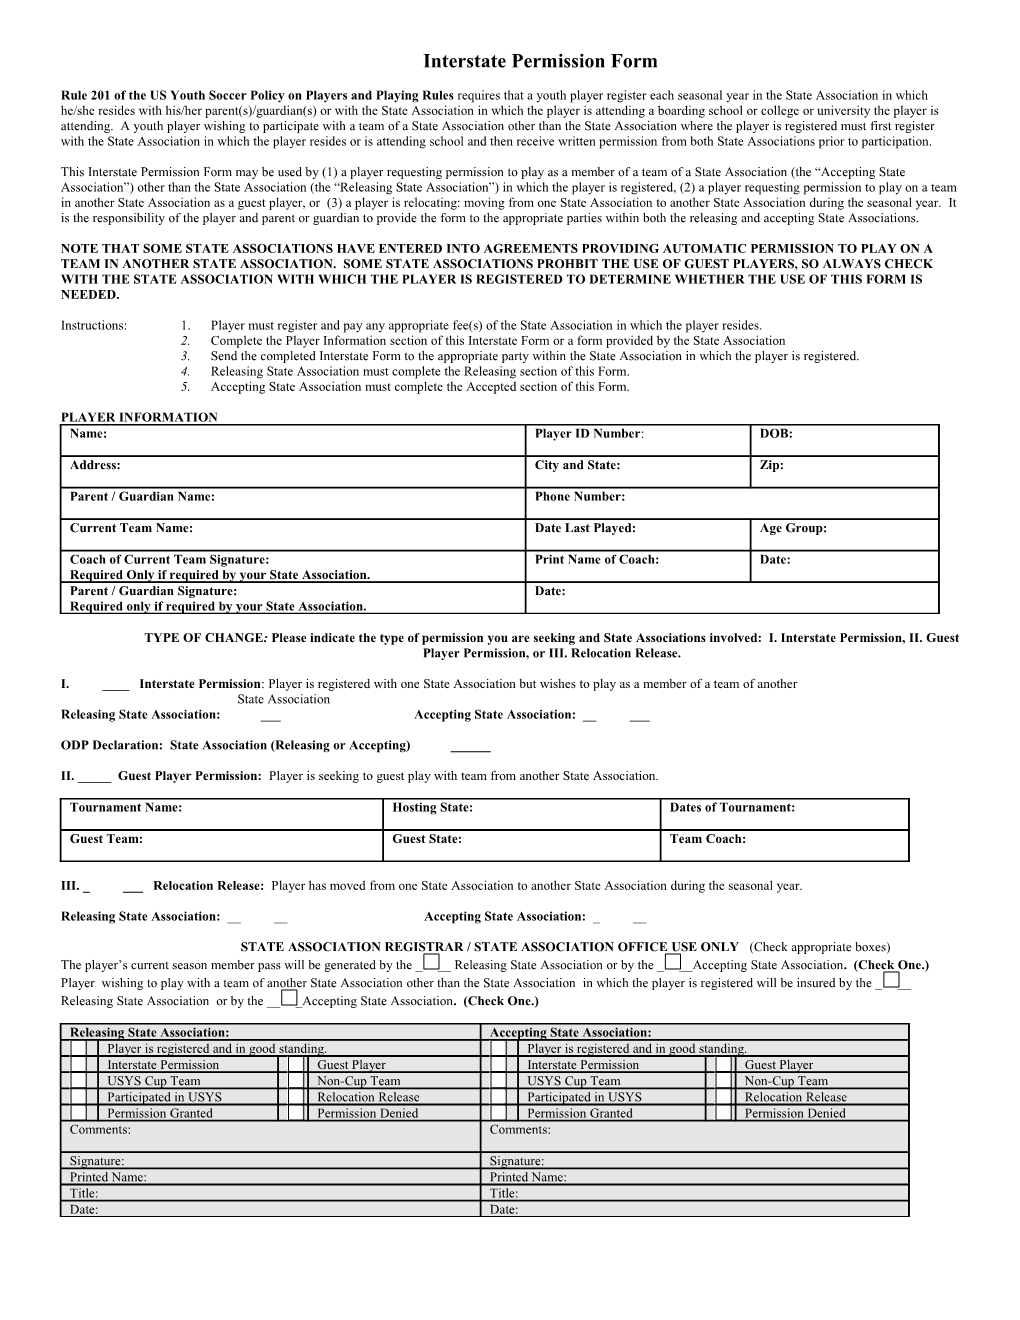 2009- 2010 Interstate USYS Region III Permission Form